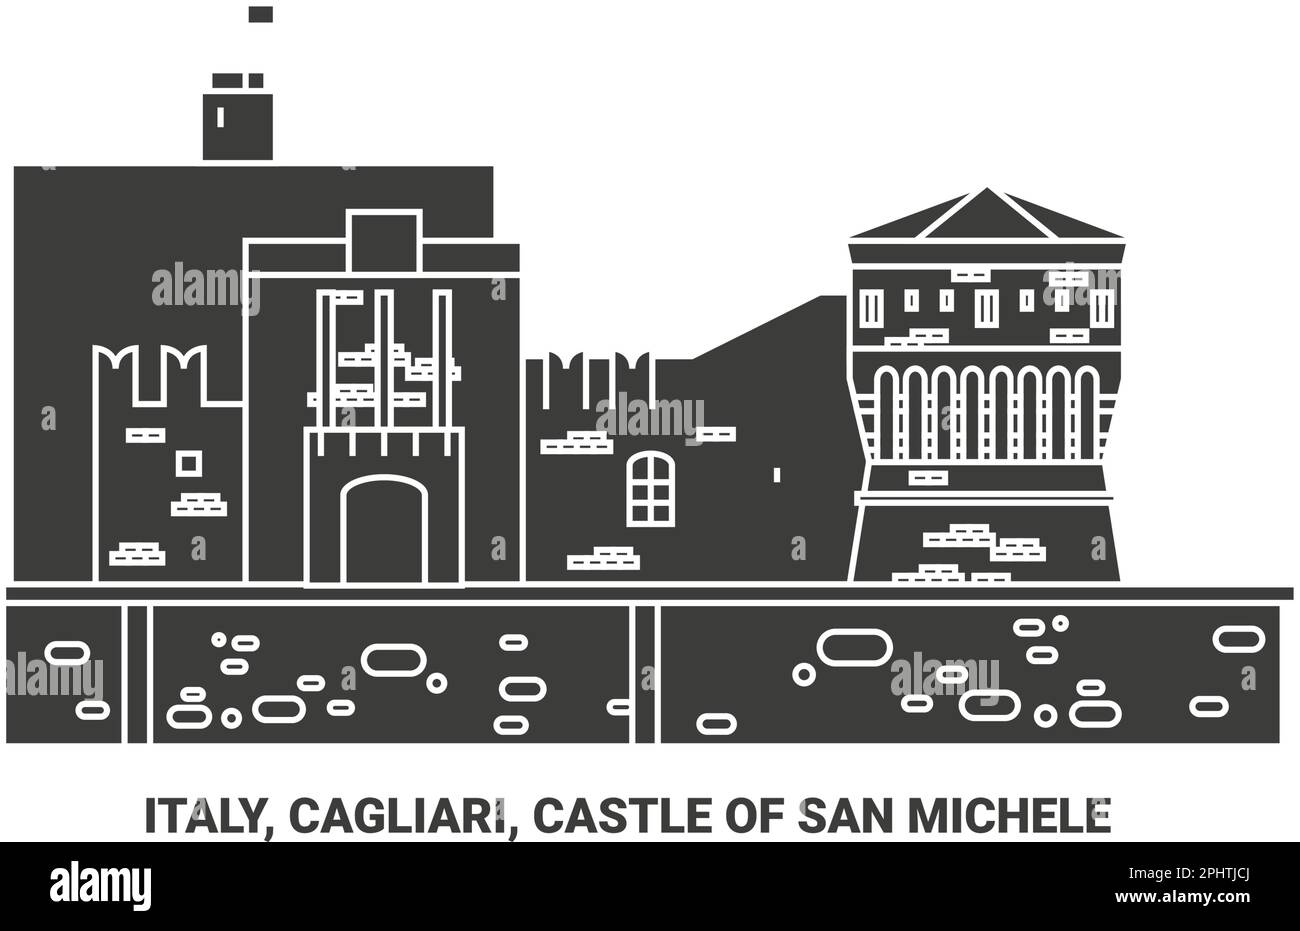 Italien, Cagliari, Burg von San Michele reisen als Vektorbild Stock Vektor